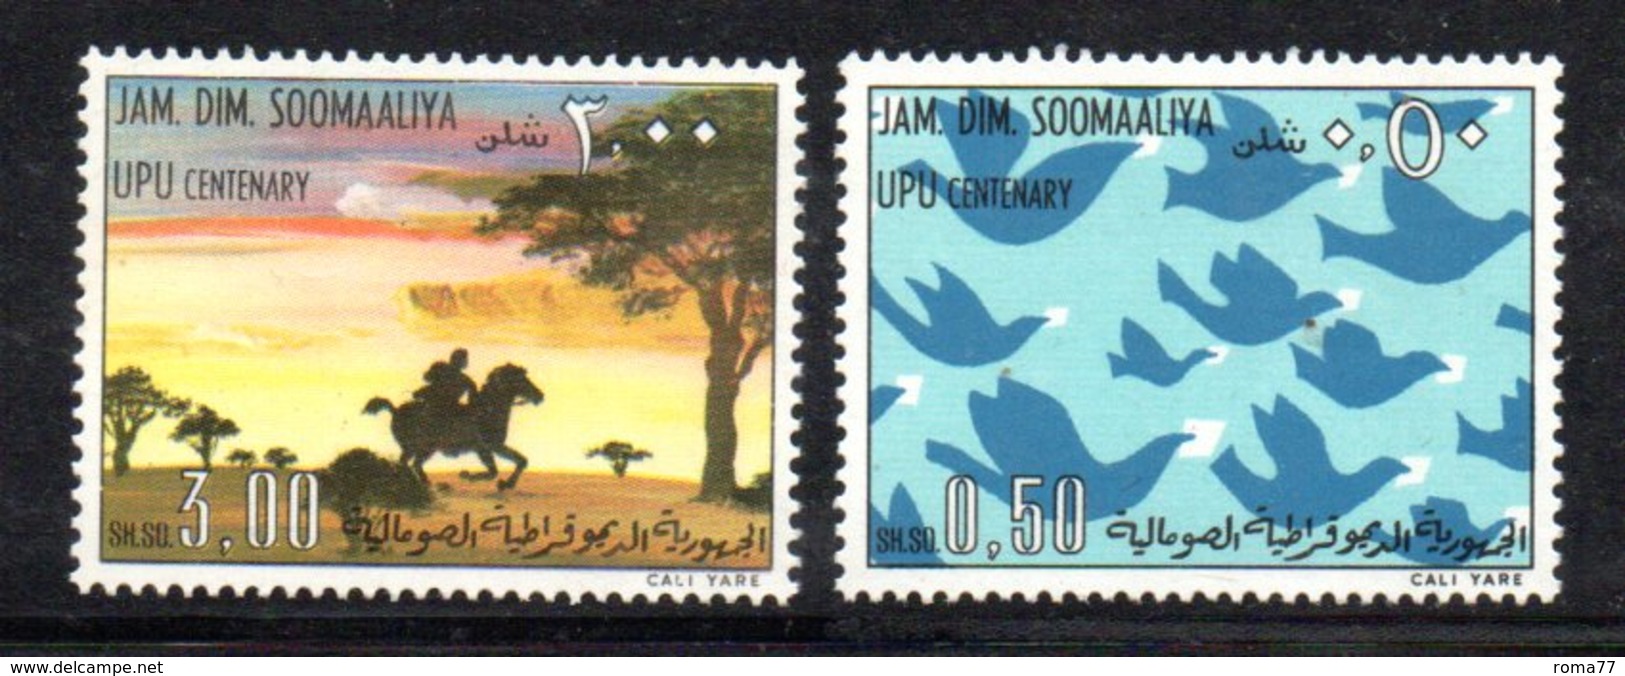 XP4067 - SOMALIA 1975 ,  Serie Yvert N. 174/175  *** MNH  Upu 1974 - Somalia (1960-...)